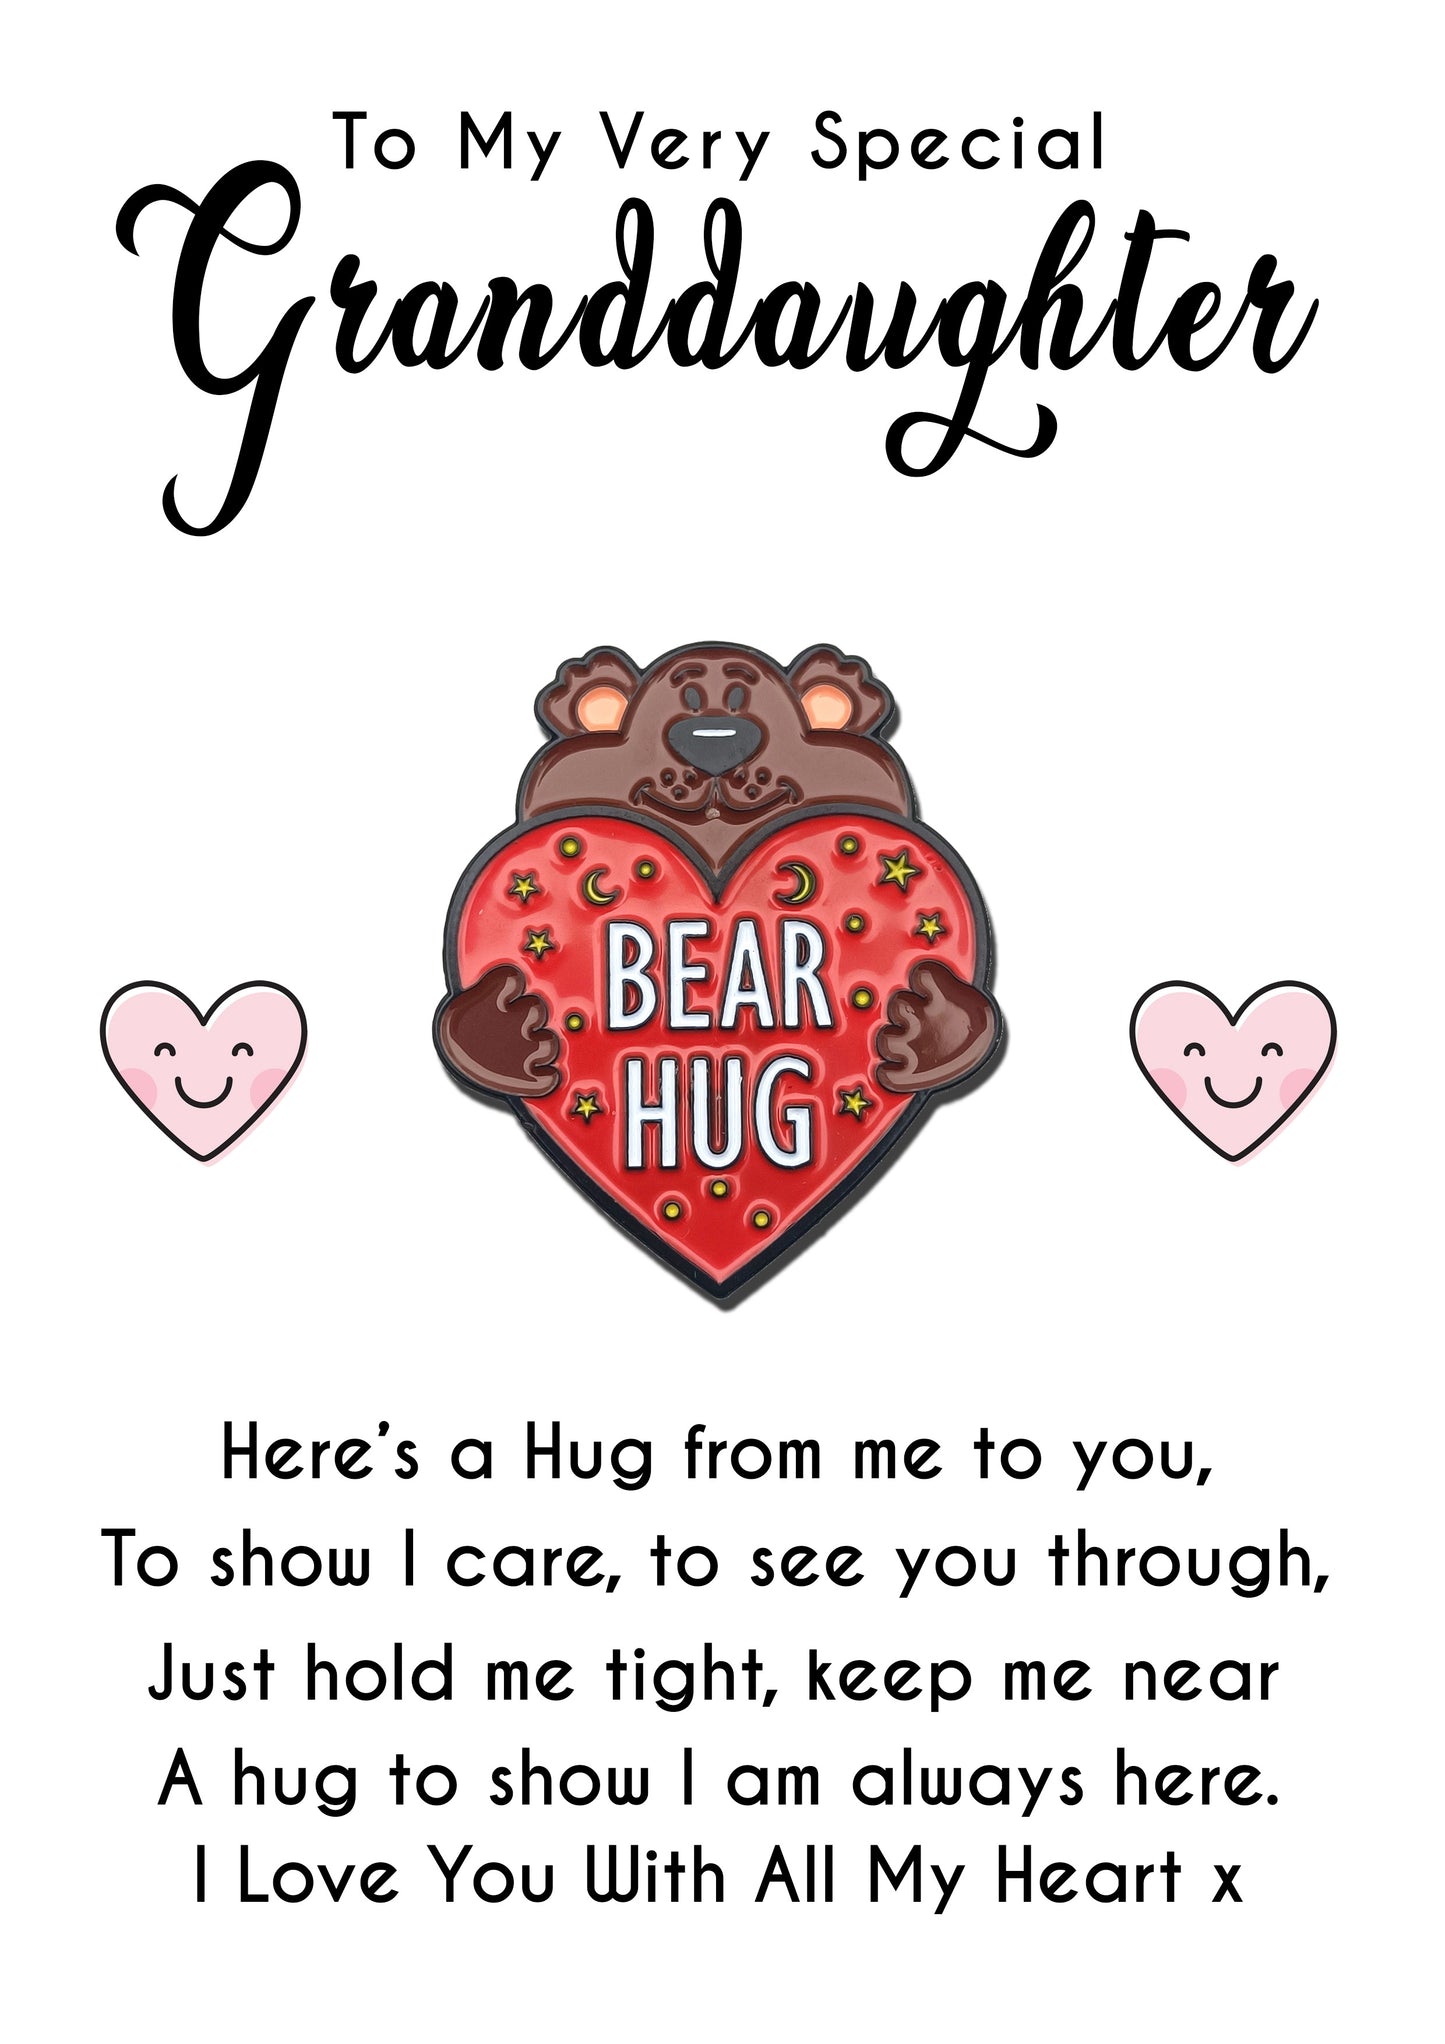 Granddaughter Bear Hug Pin Badges & Personalised Message Card